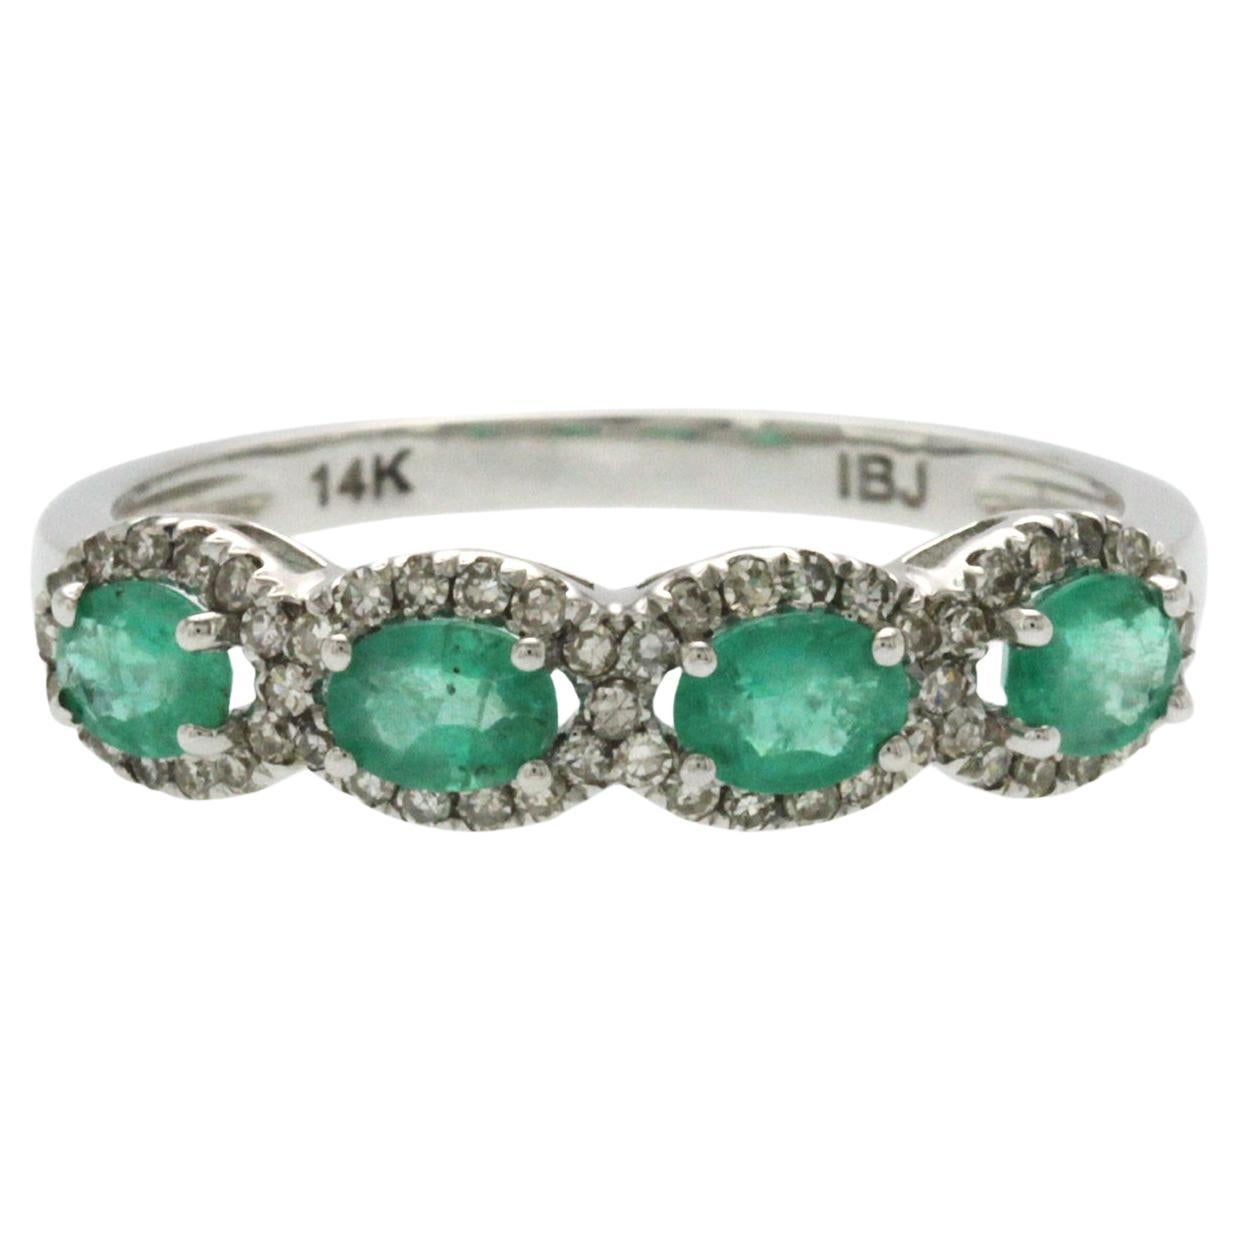 0.40 CT Colombian Emerald & 0.24 CT Diamonds 14K White Gold Wedding Band Ring